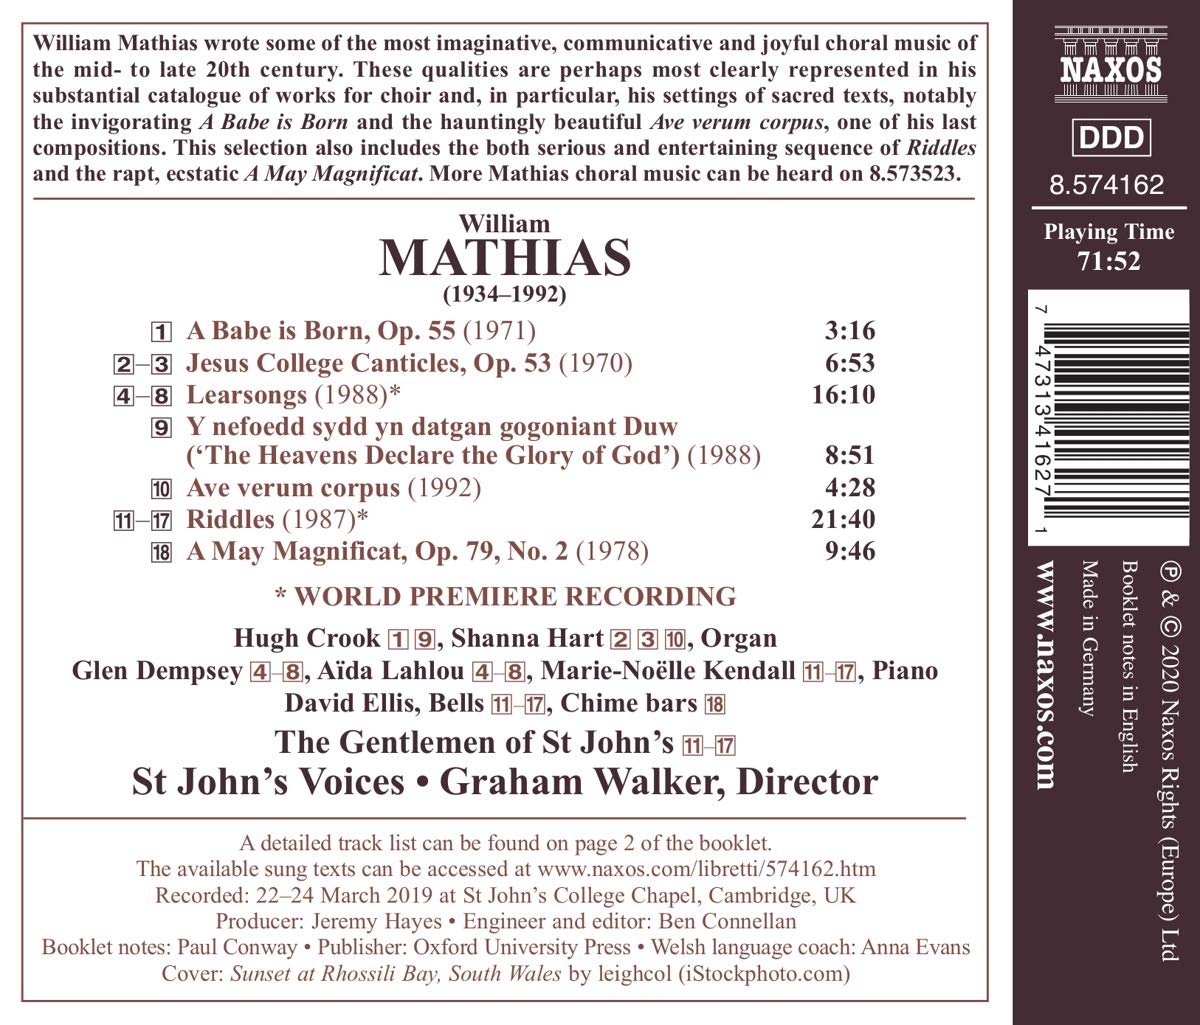 Graham Walker 윌리엄 마티아스: 합창 음악 작품집 (William Mathias: Choral Music - A May Magnificat)